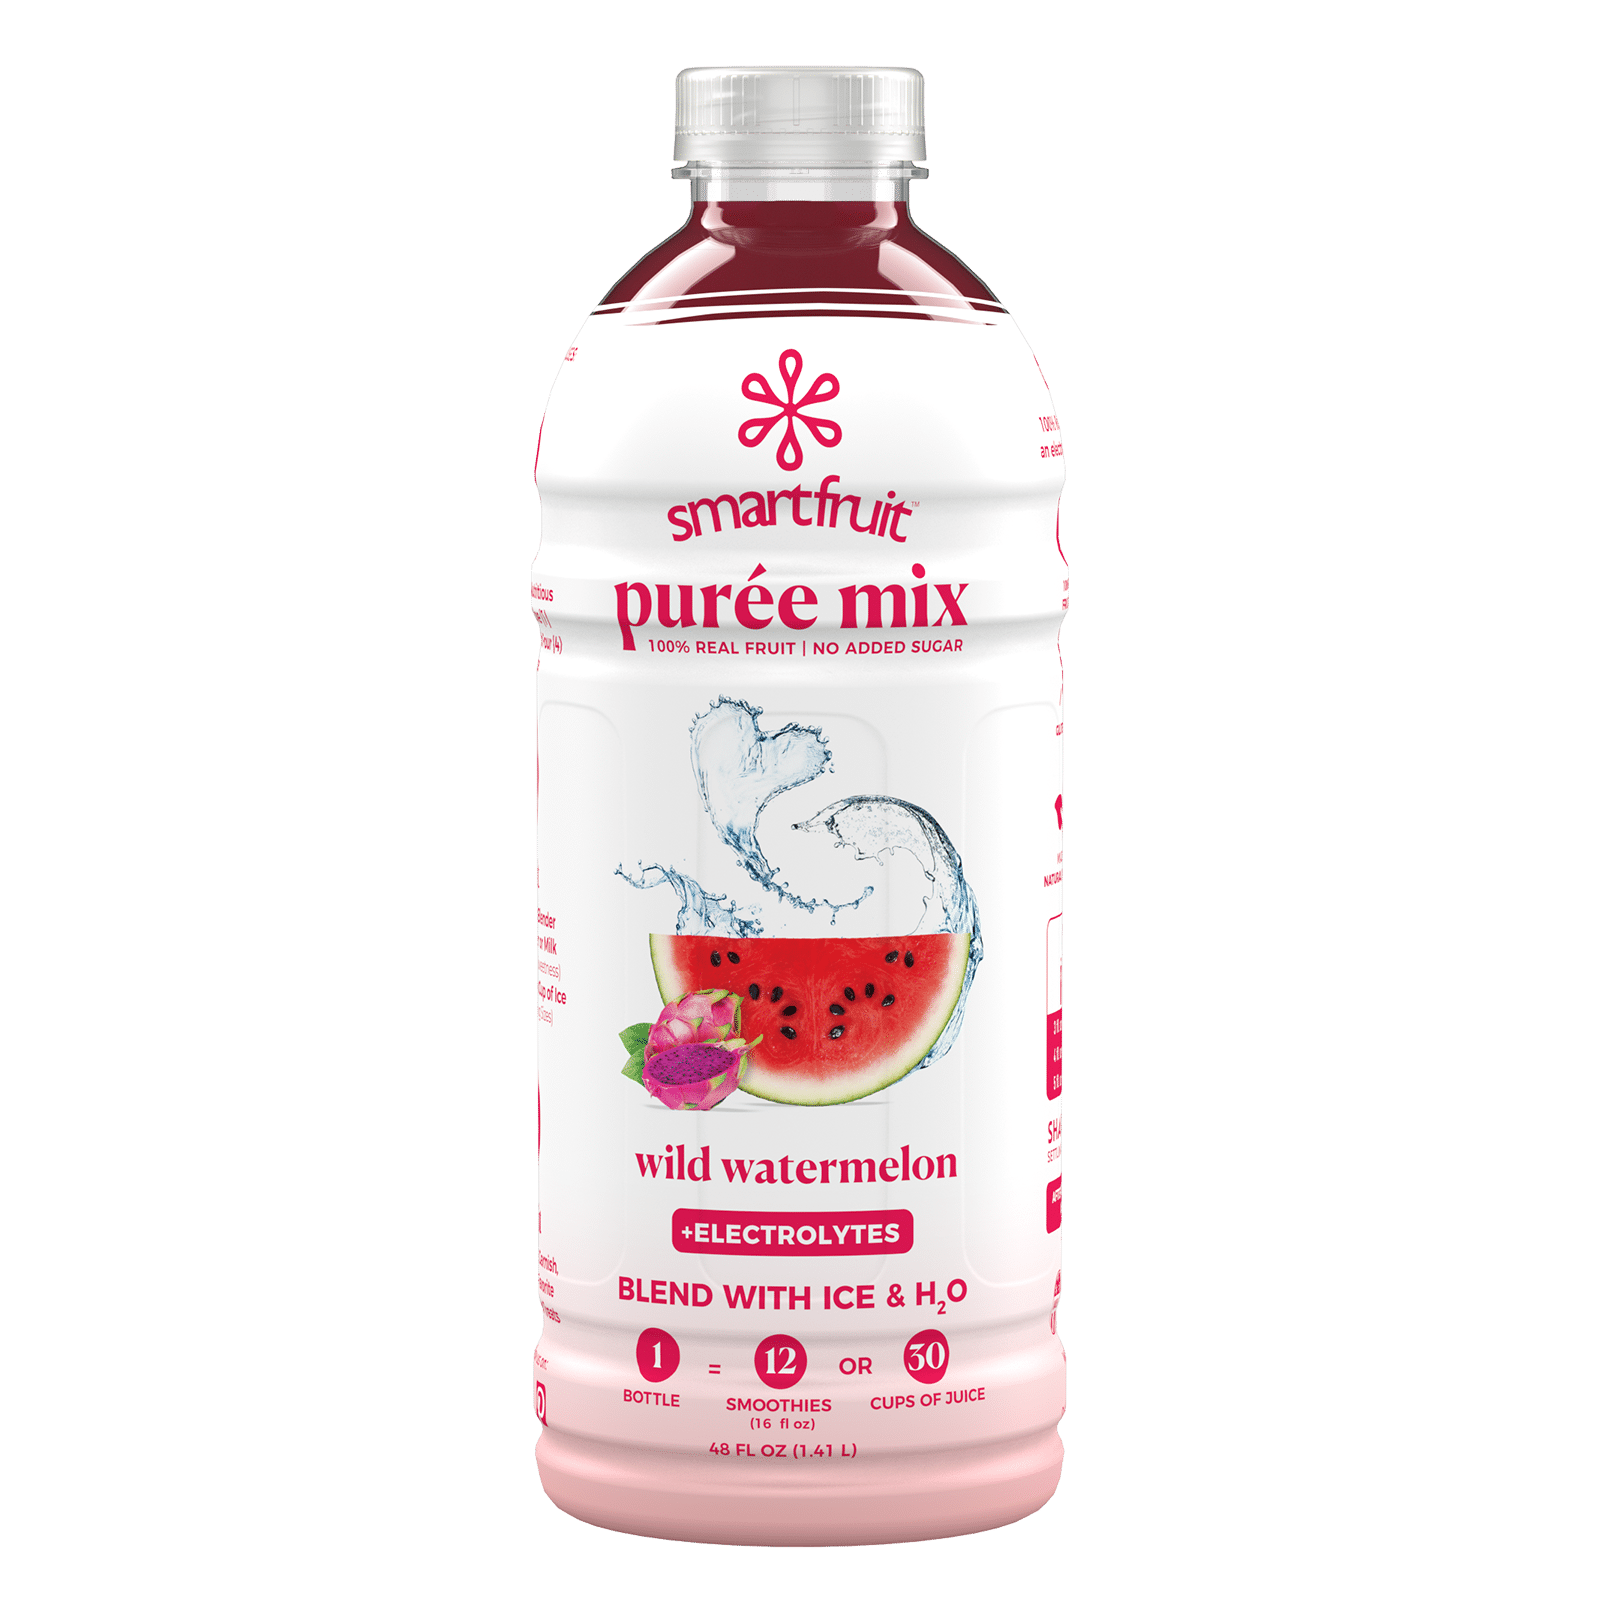 Smartfruit Wild Watermelon Puree Mix bottle